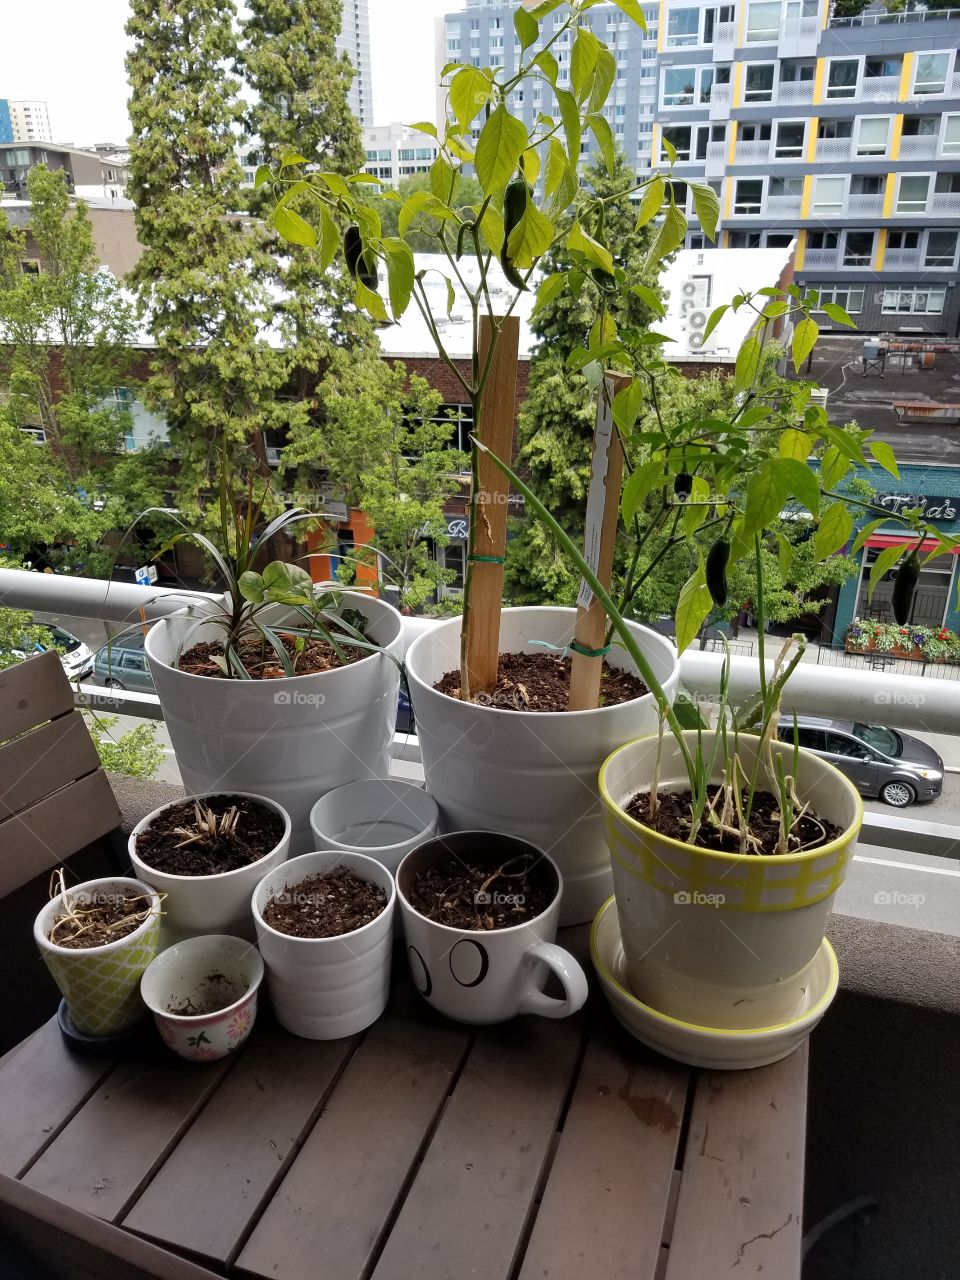 Plants on an apartment balcony